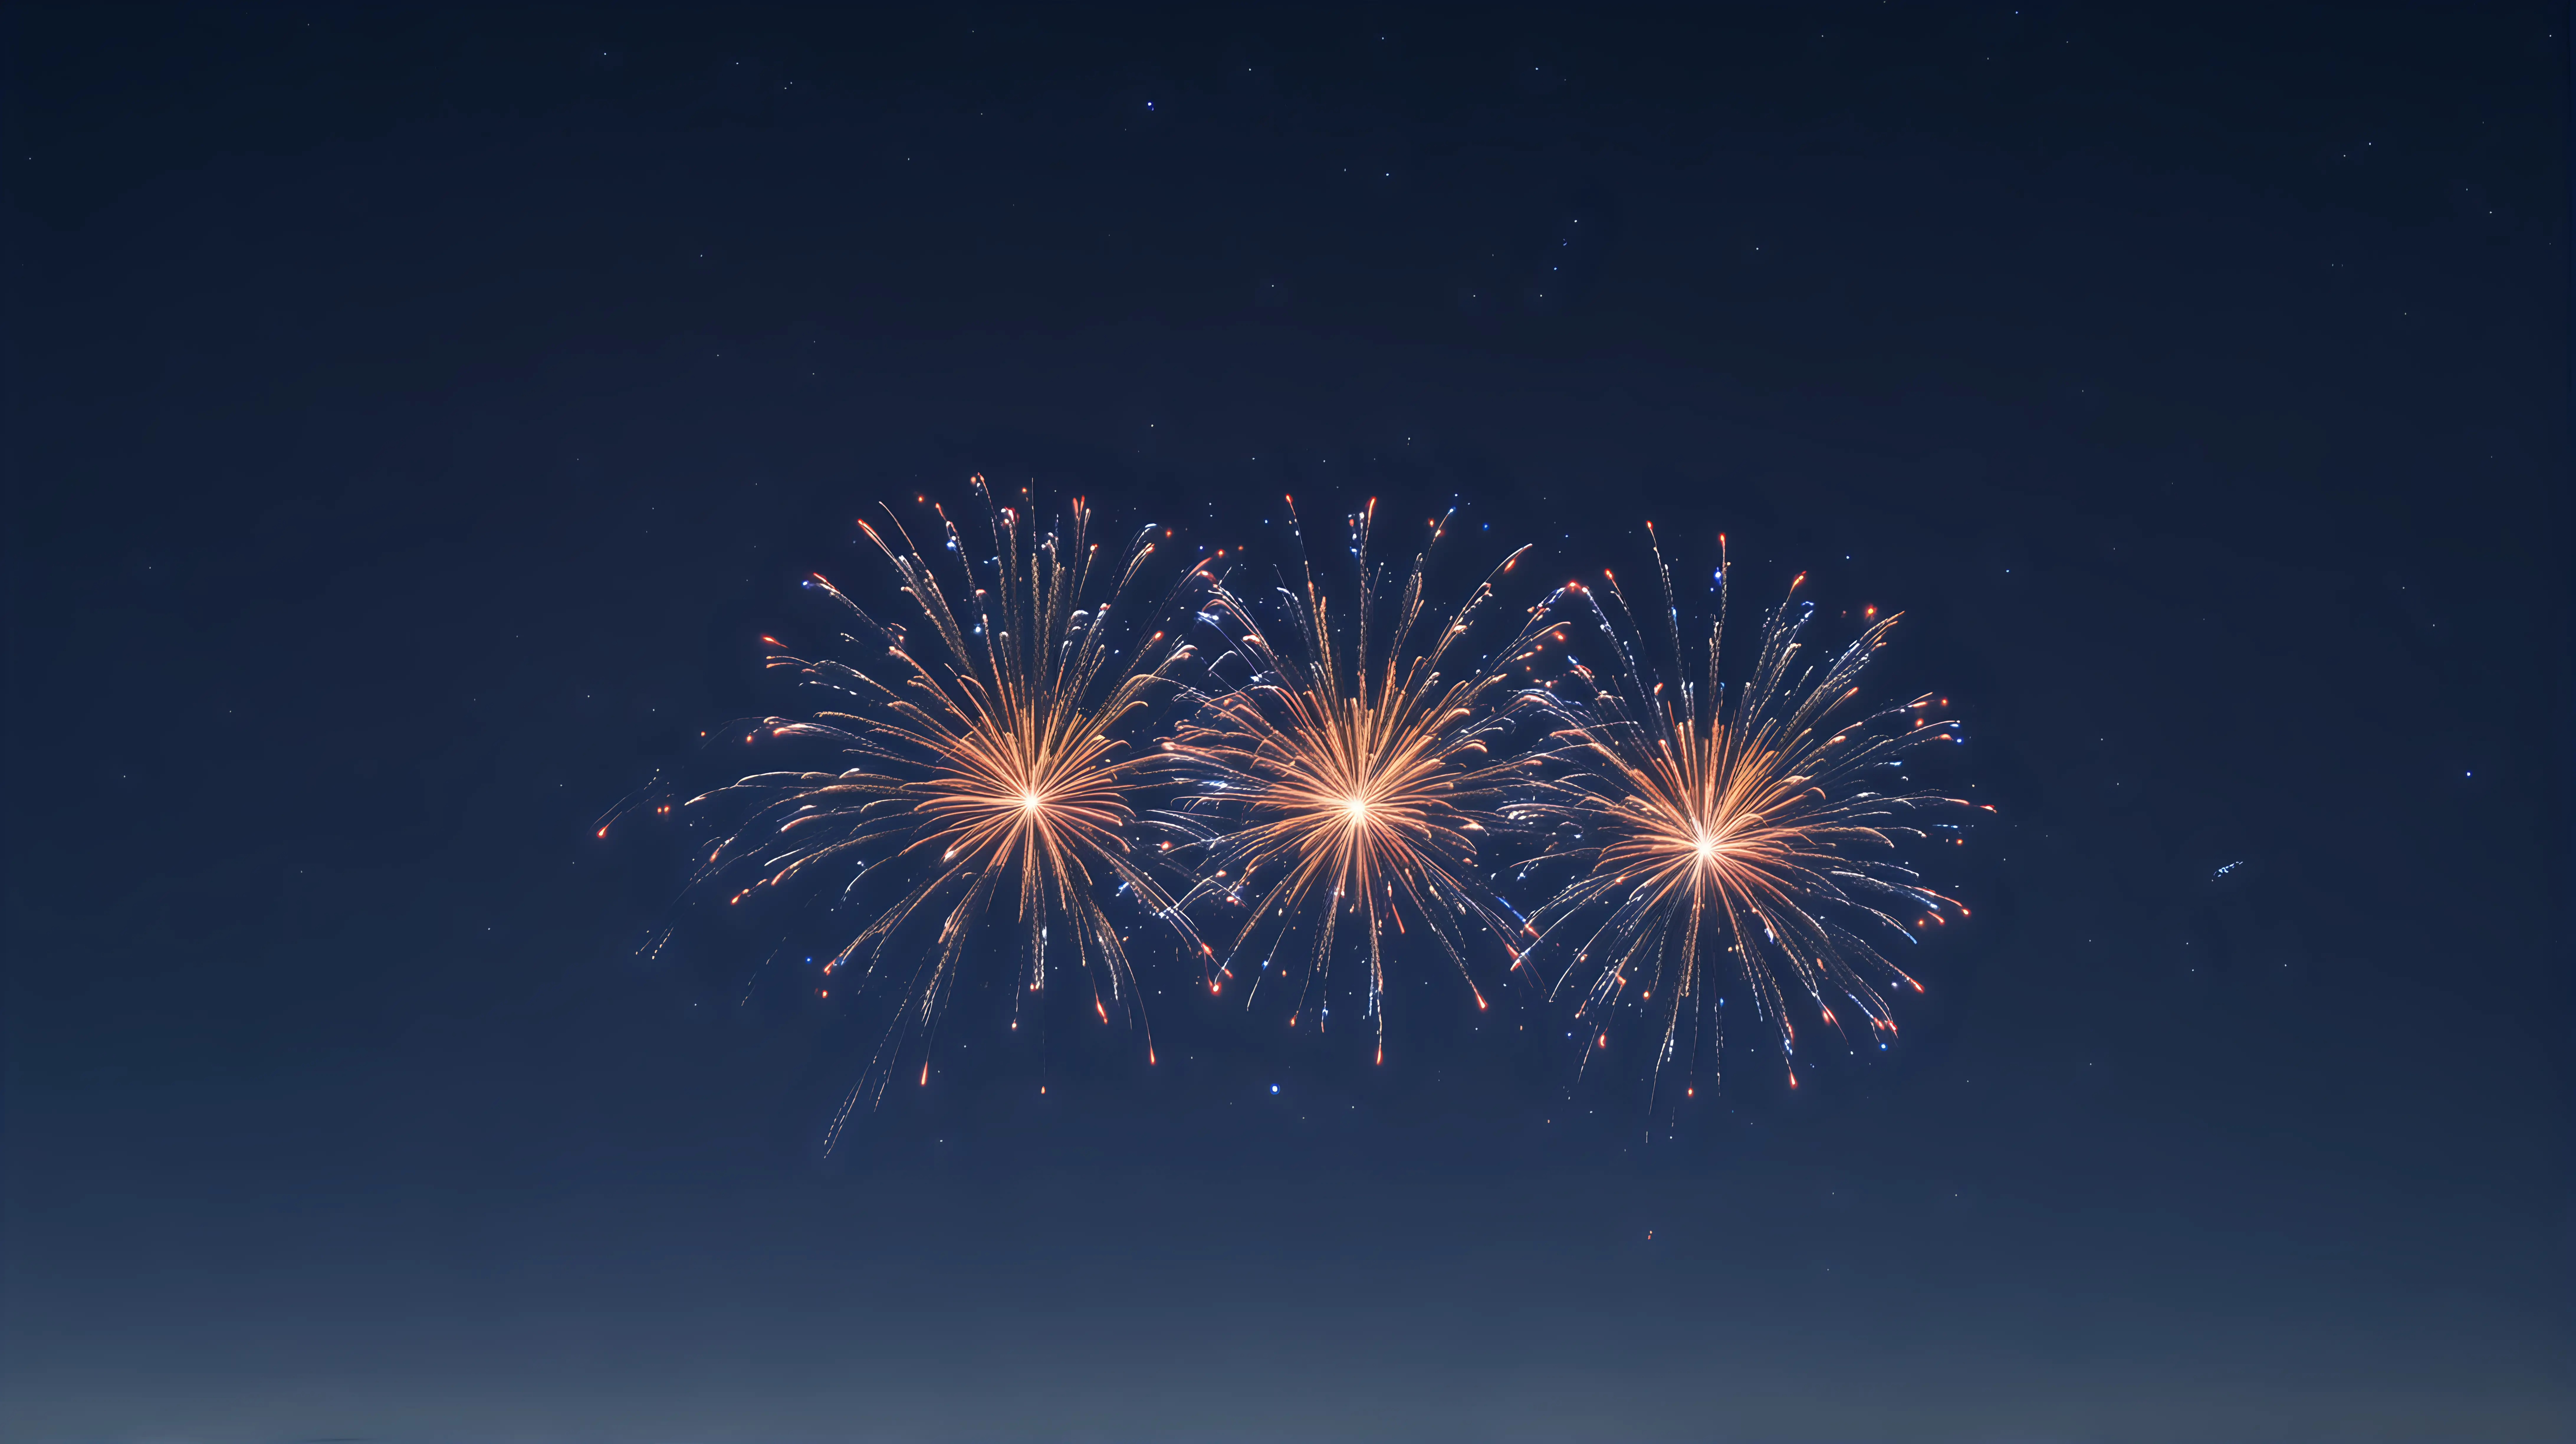 Vibrant Tiny Fireworks Illuminate the Vast Night Sky